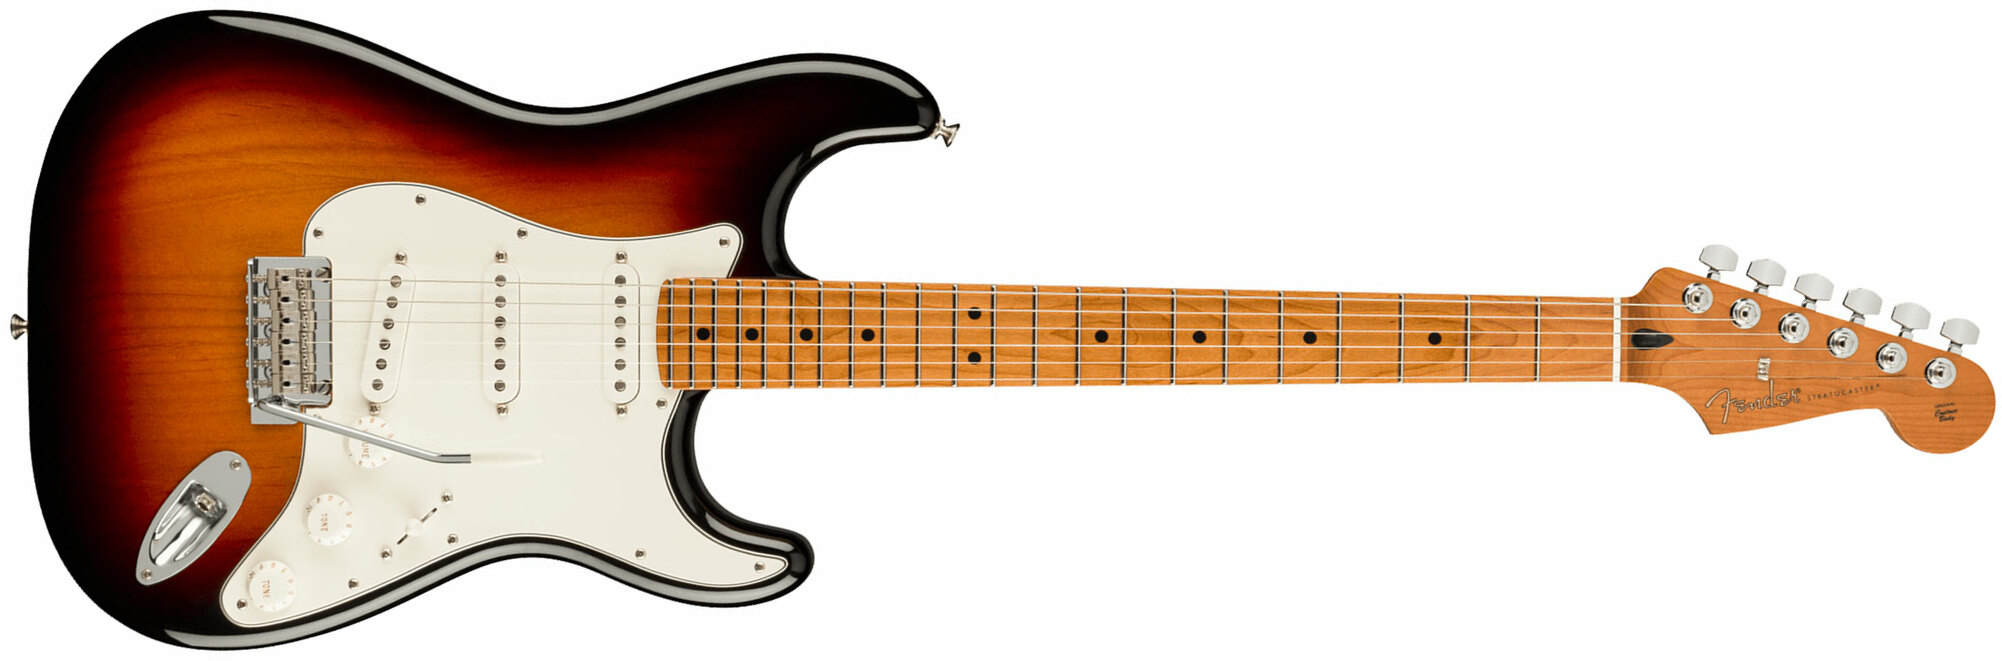 Fender Strat Player Roasted Maple Neck Ltd Mex 3s Trem Mn - 3 Color Sunburst - Str shape electric guitar - Main picture